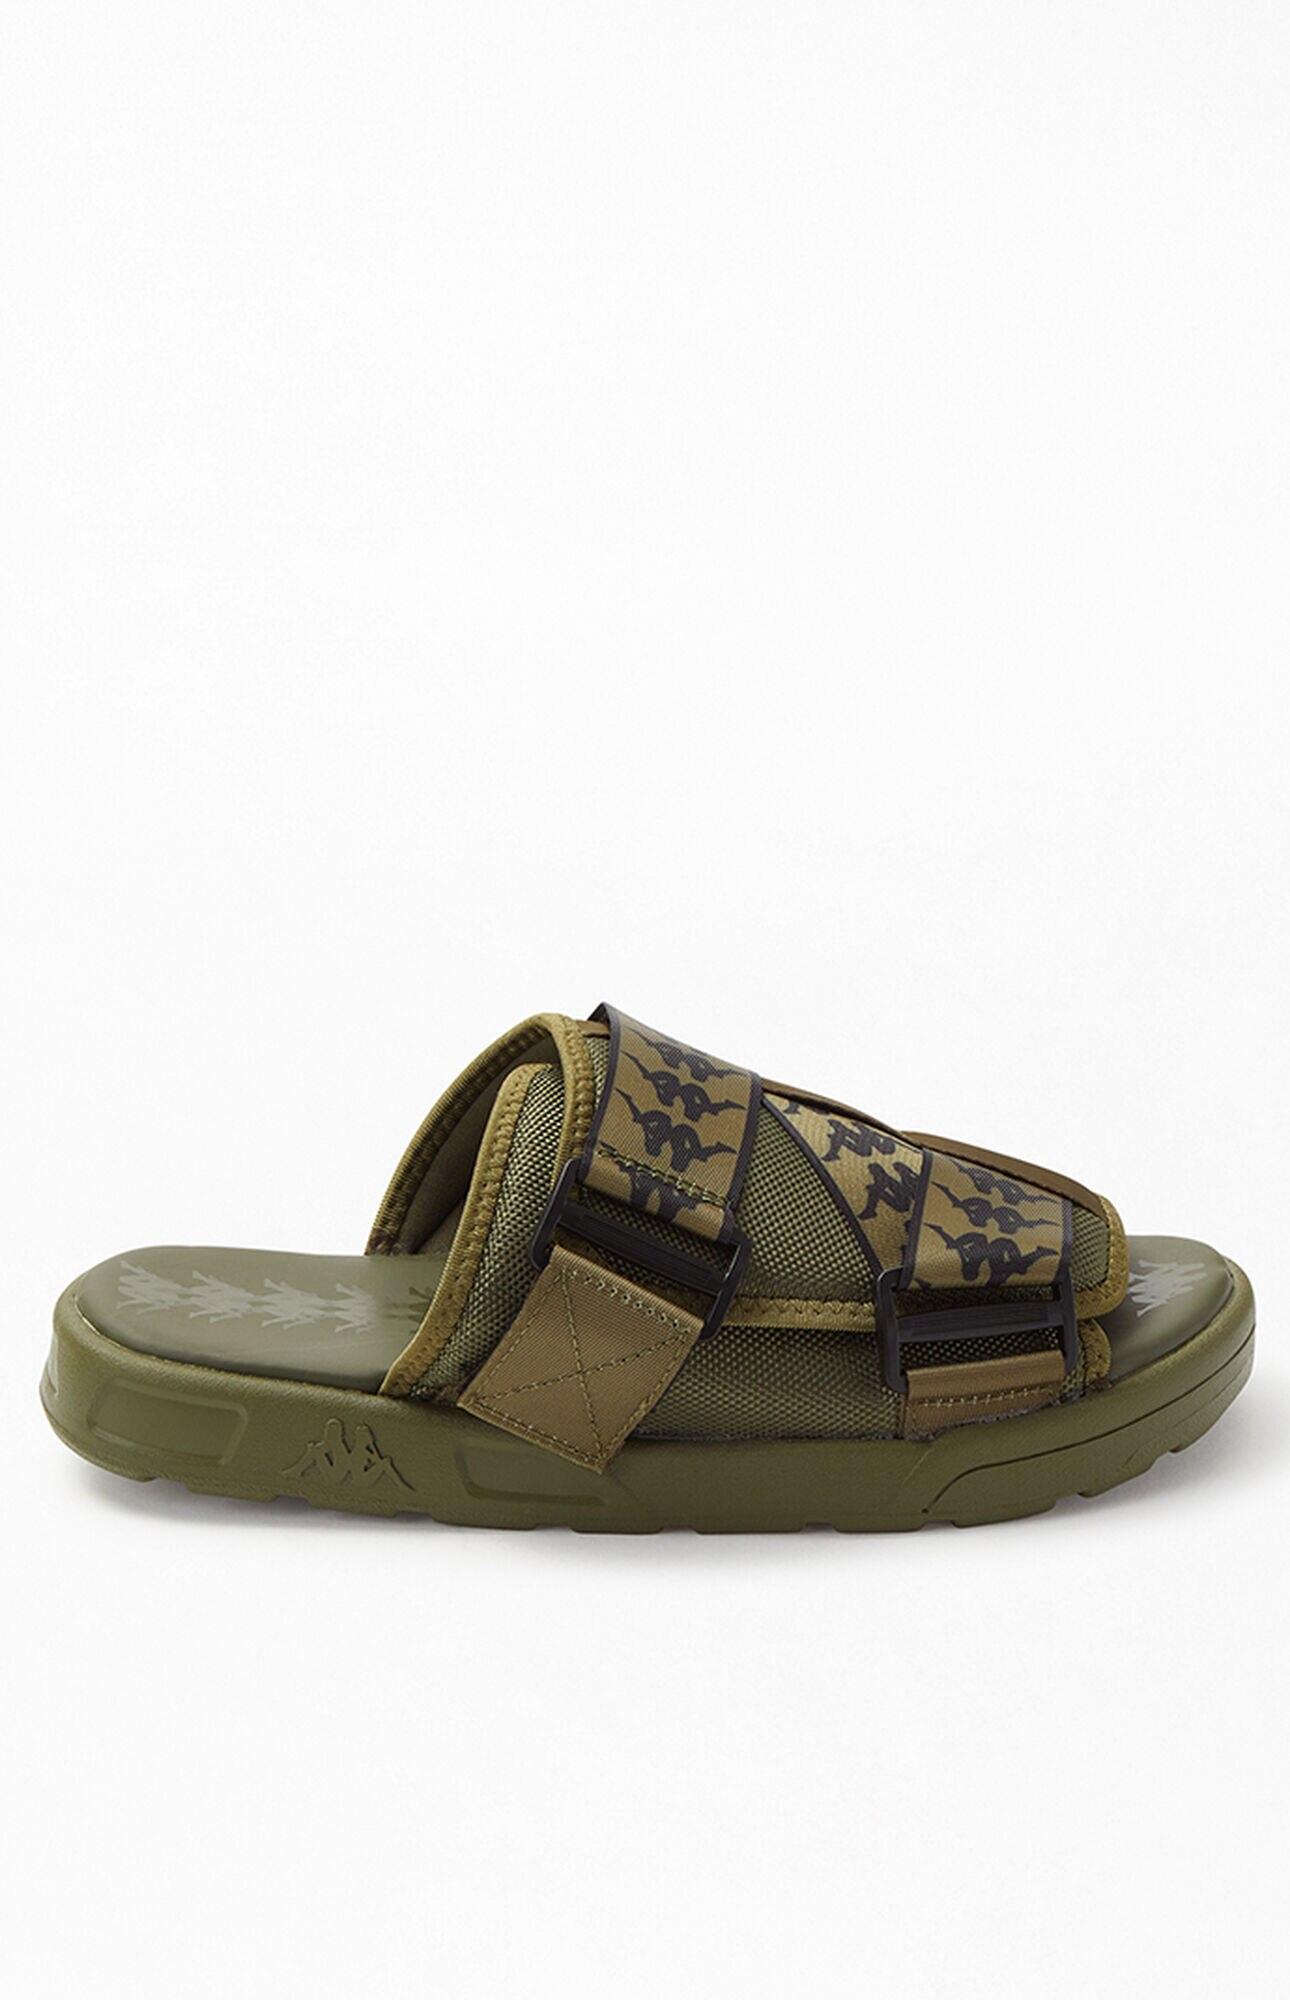 Kappa Rubber 222 Banda Mitel 1 Slide Sandals in Green for Men - Lyst